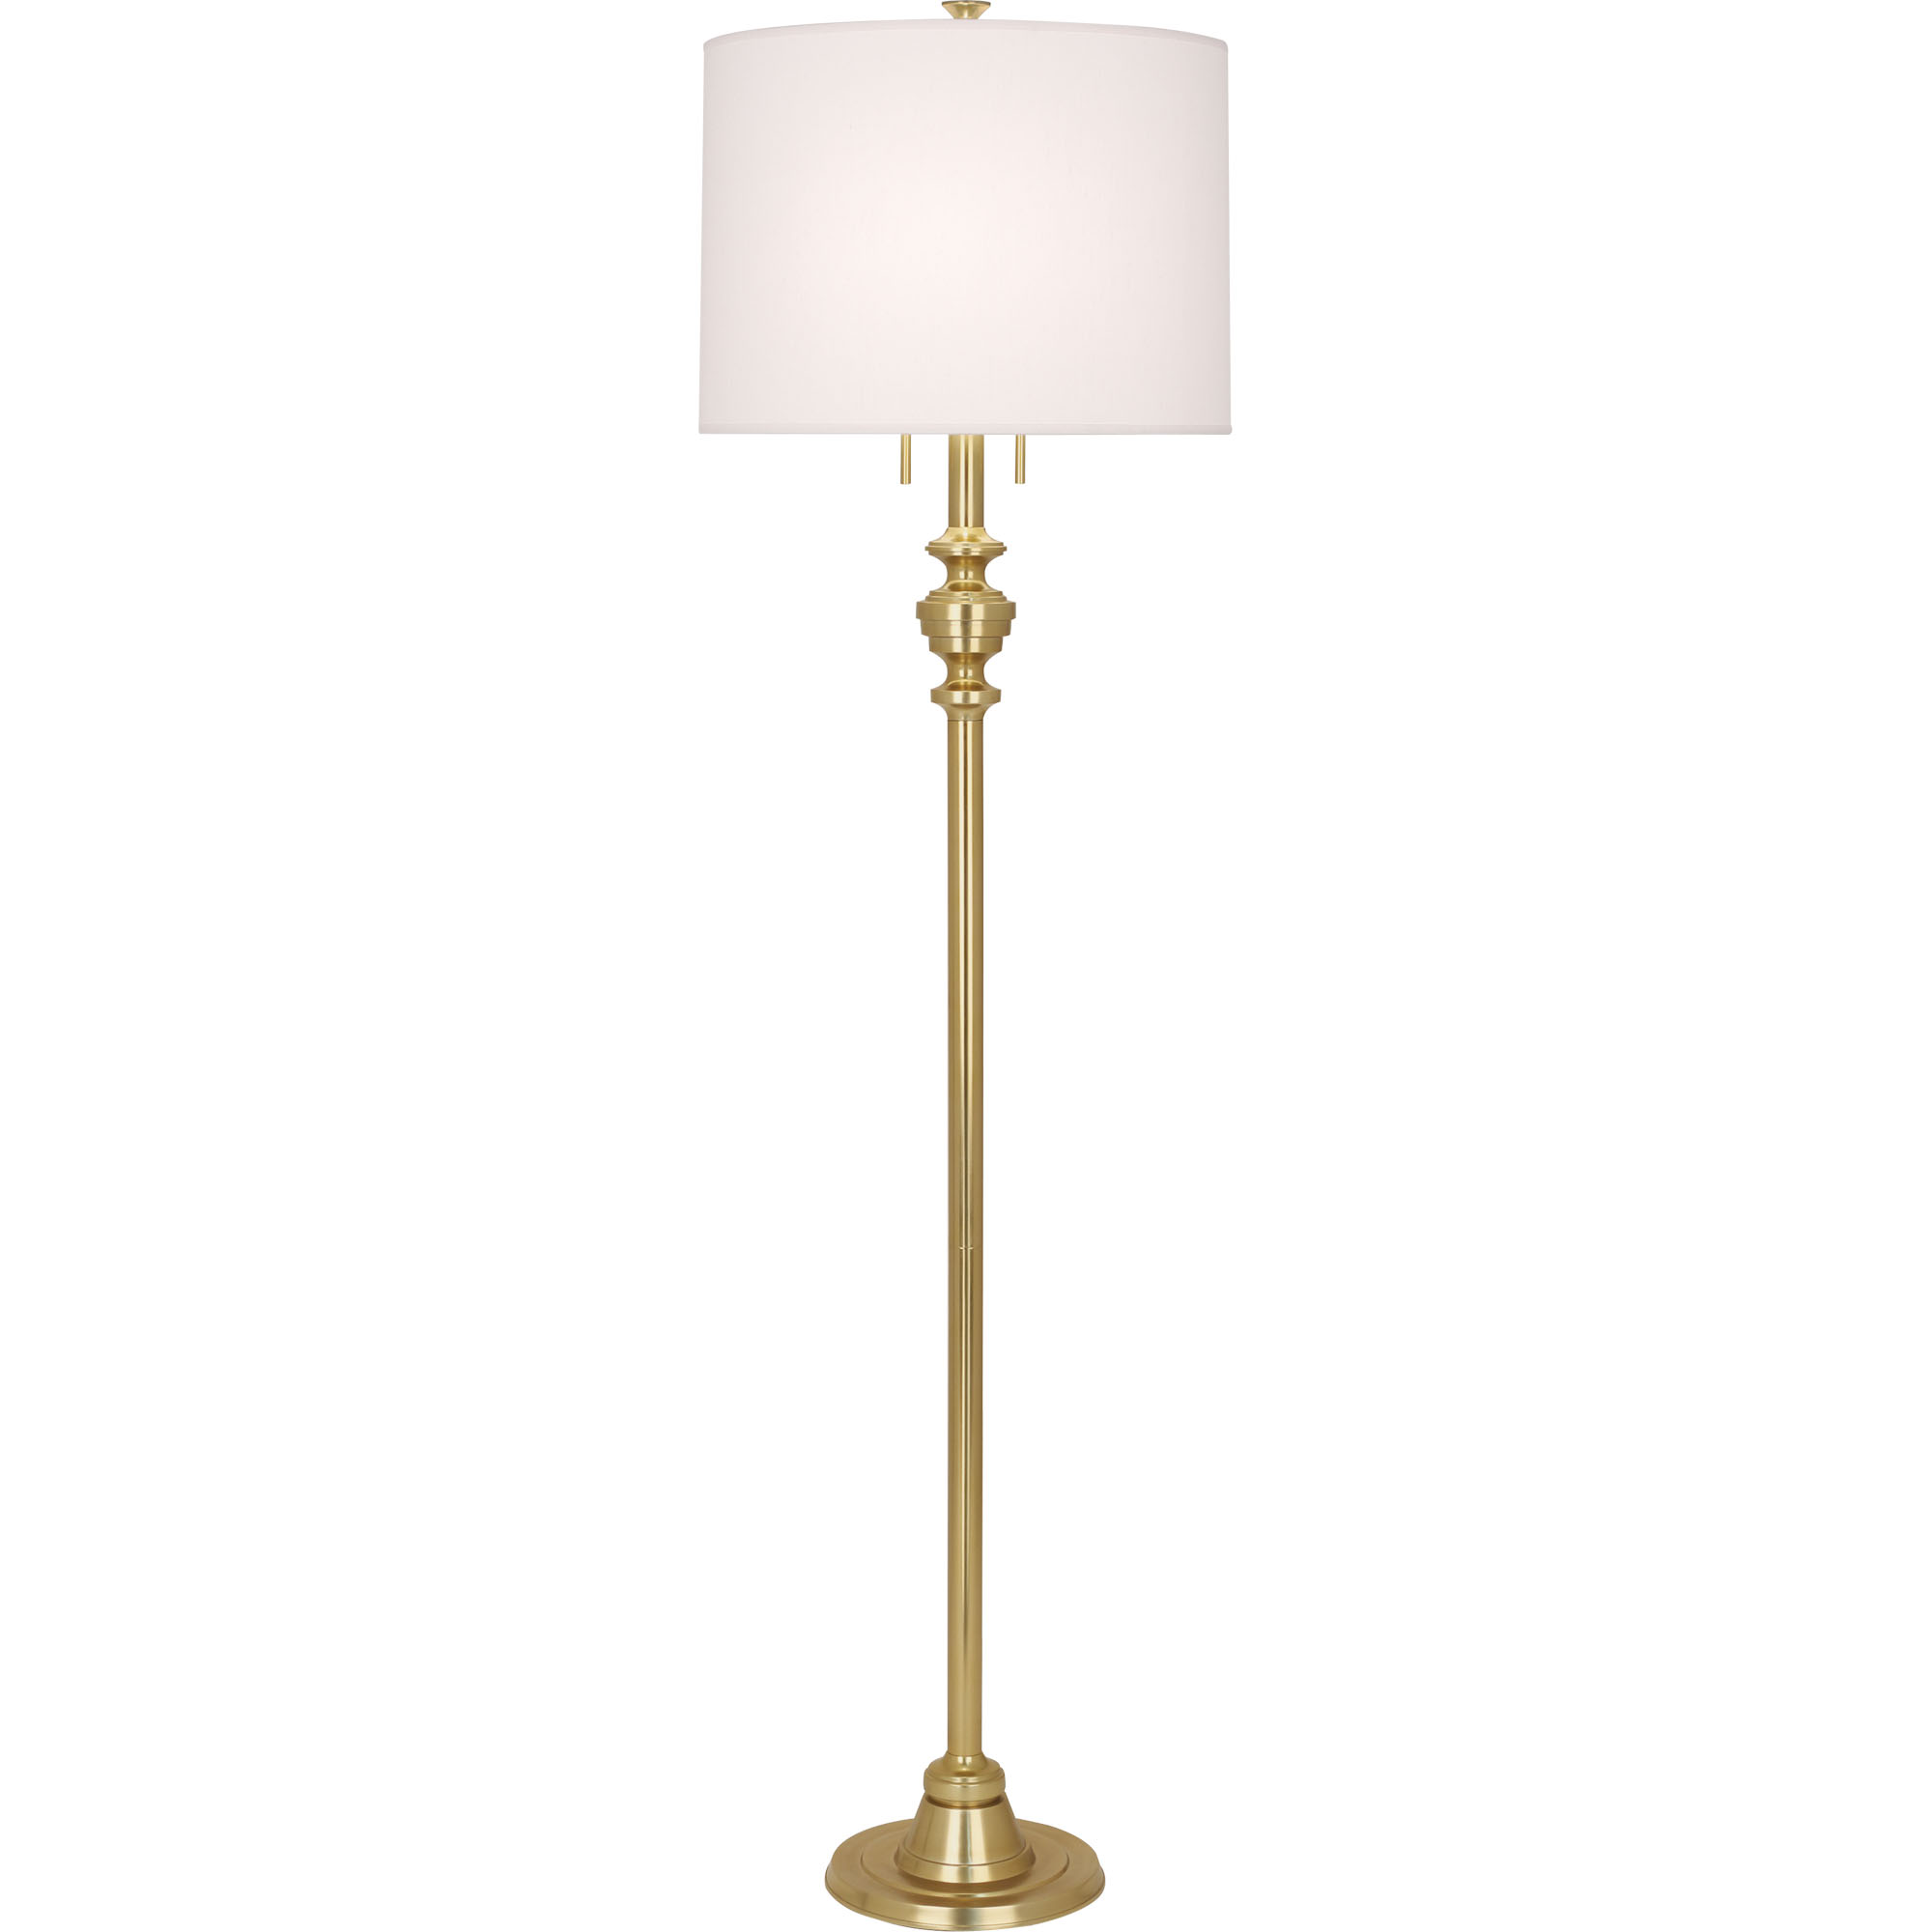 Arthur Floor Lamp Style #1223